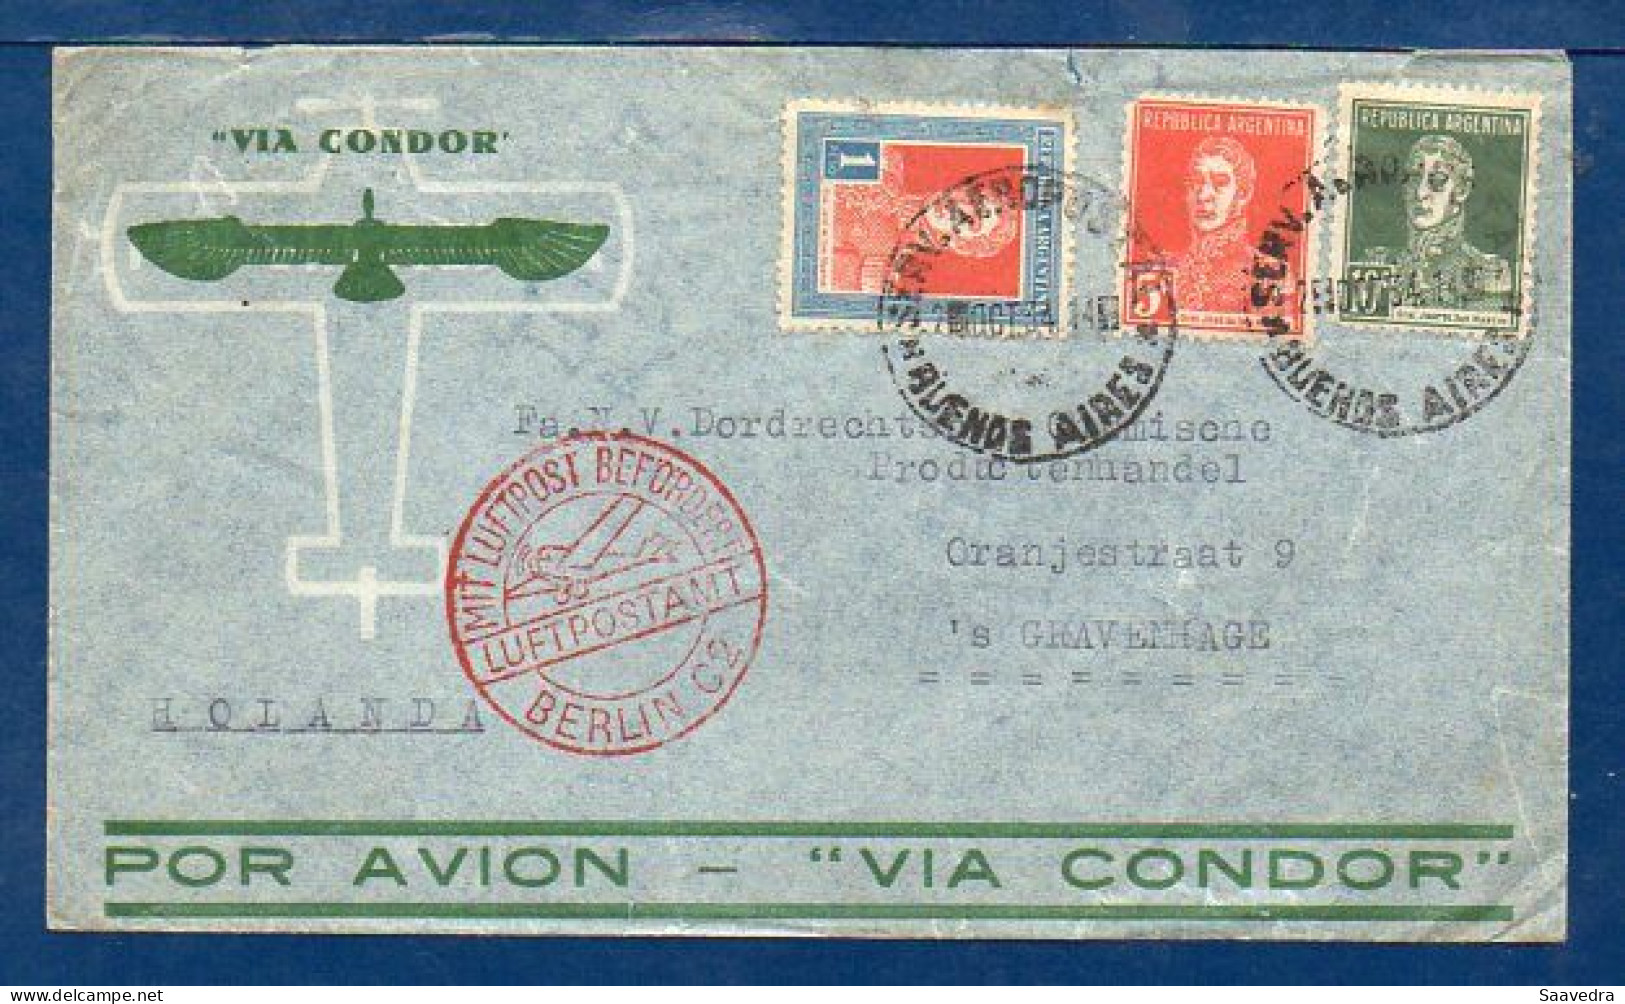 Argentina To Netherland, 1935, Via ZEPPELIN Flight G-409, SEE DESCRIPTION   (050) - Lettres & Documents